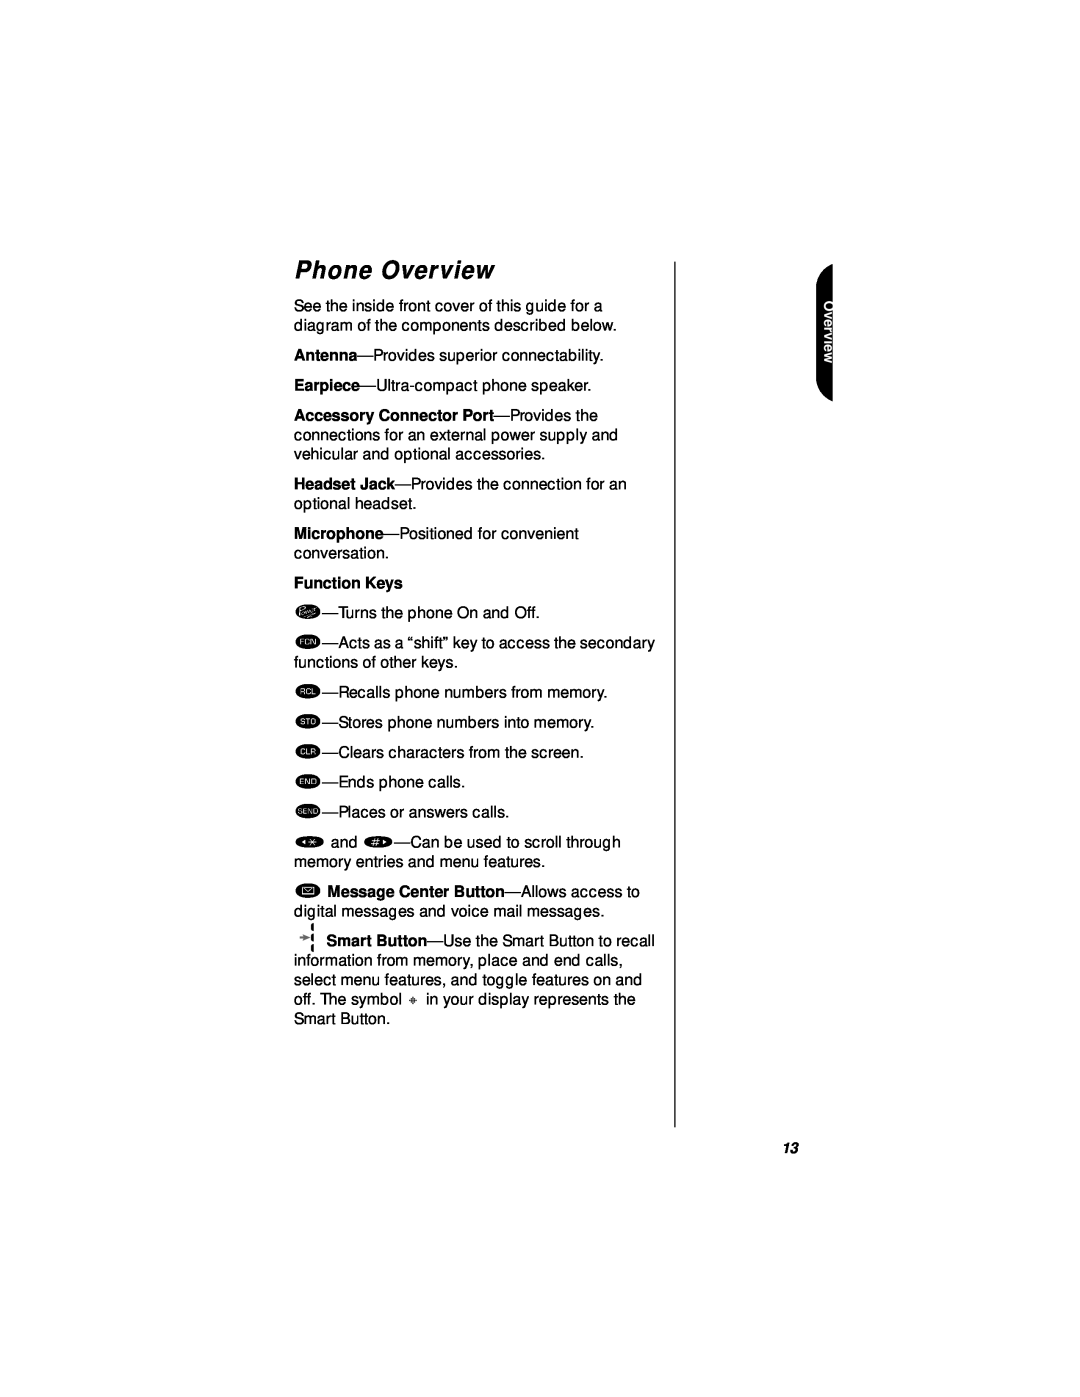 Motorola StarTAC specifications Phone Overview, Function Keys 